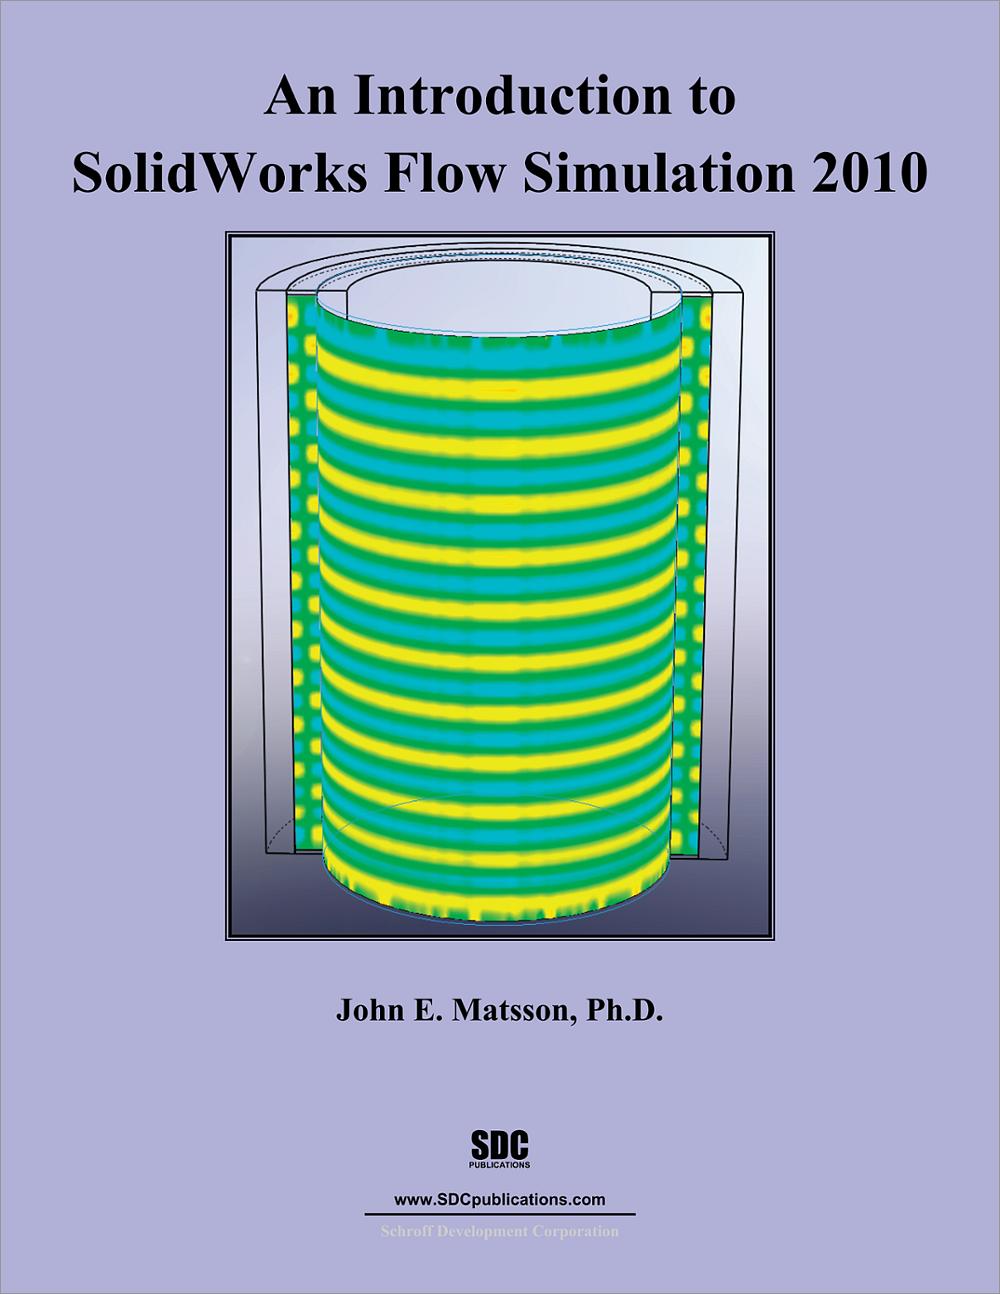 solidworks flow simulation 2010 free download